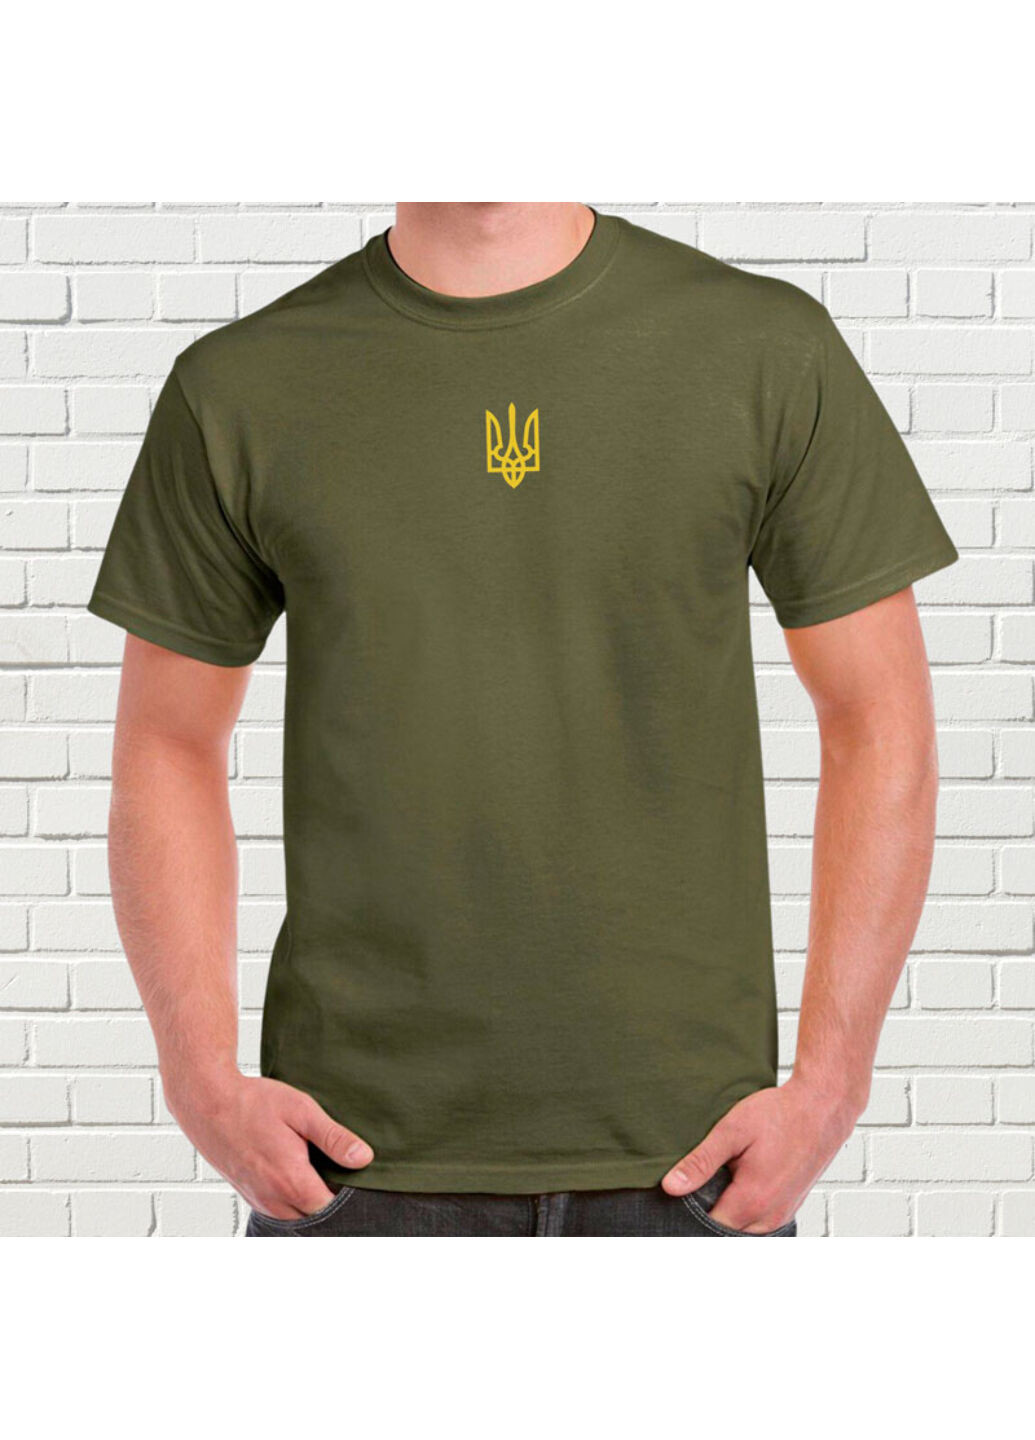 Хаки (оливковая) футболка з вишивкою золотого тризуба мужская хаки 3xl No Brand